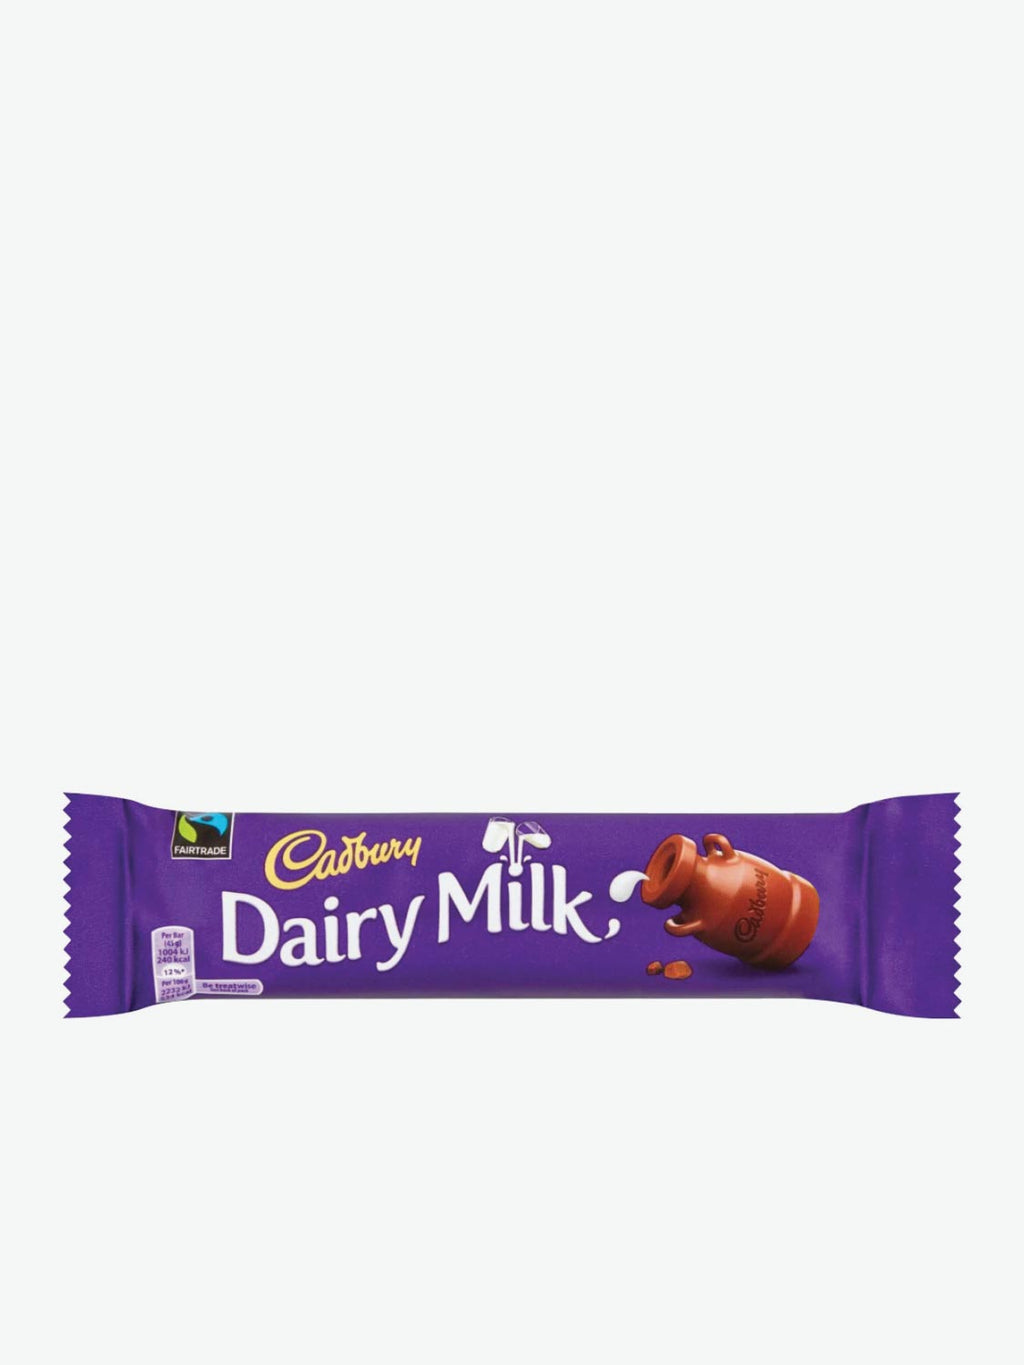 Cadbury Dairy Milk | A